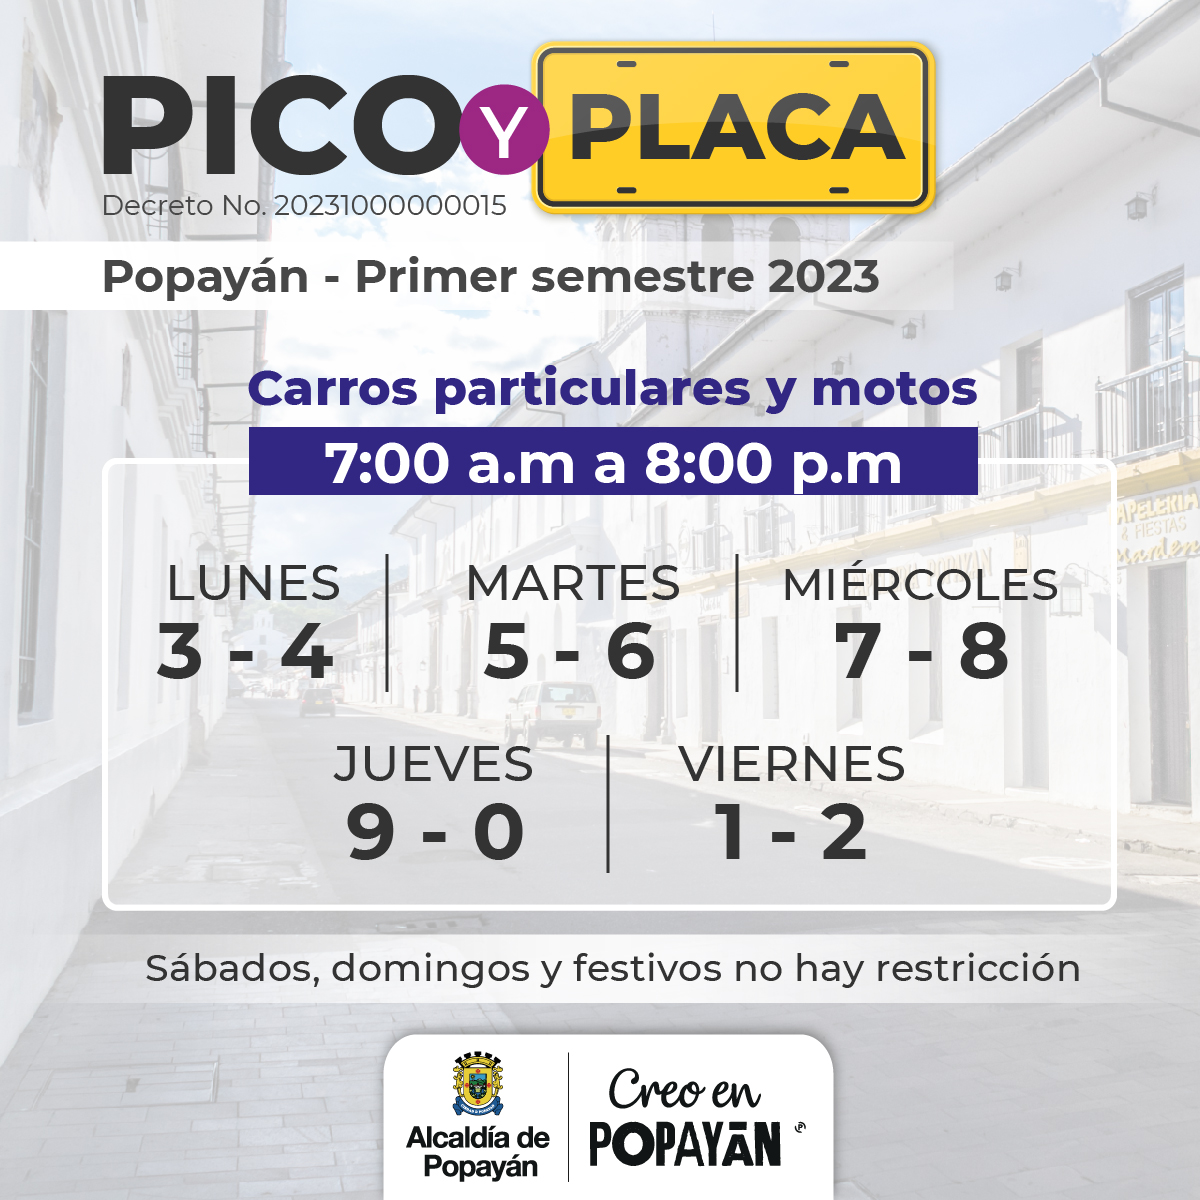 PicoyPlaca2023-01.jpg